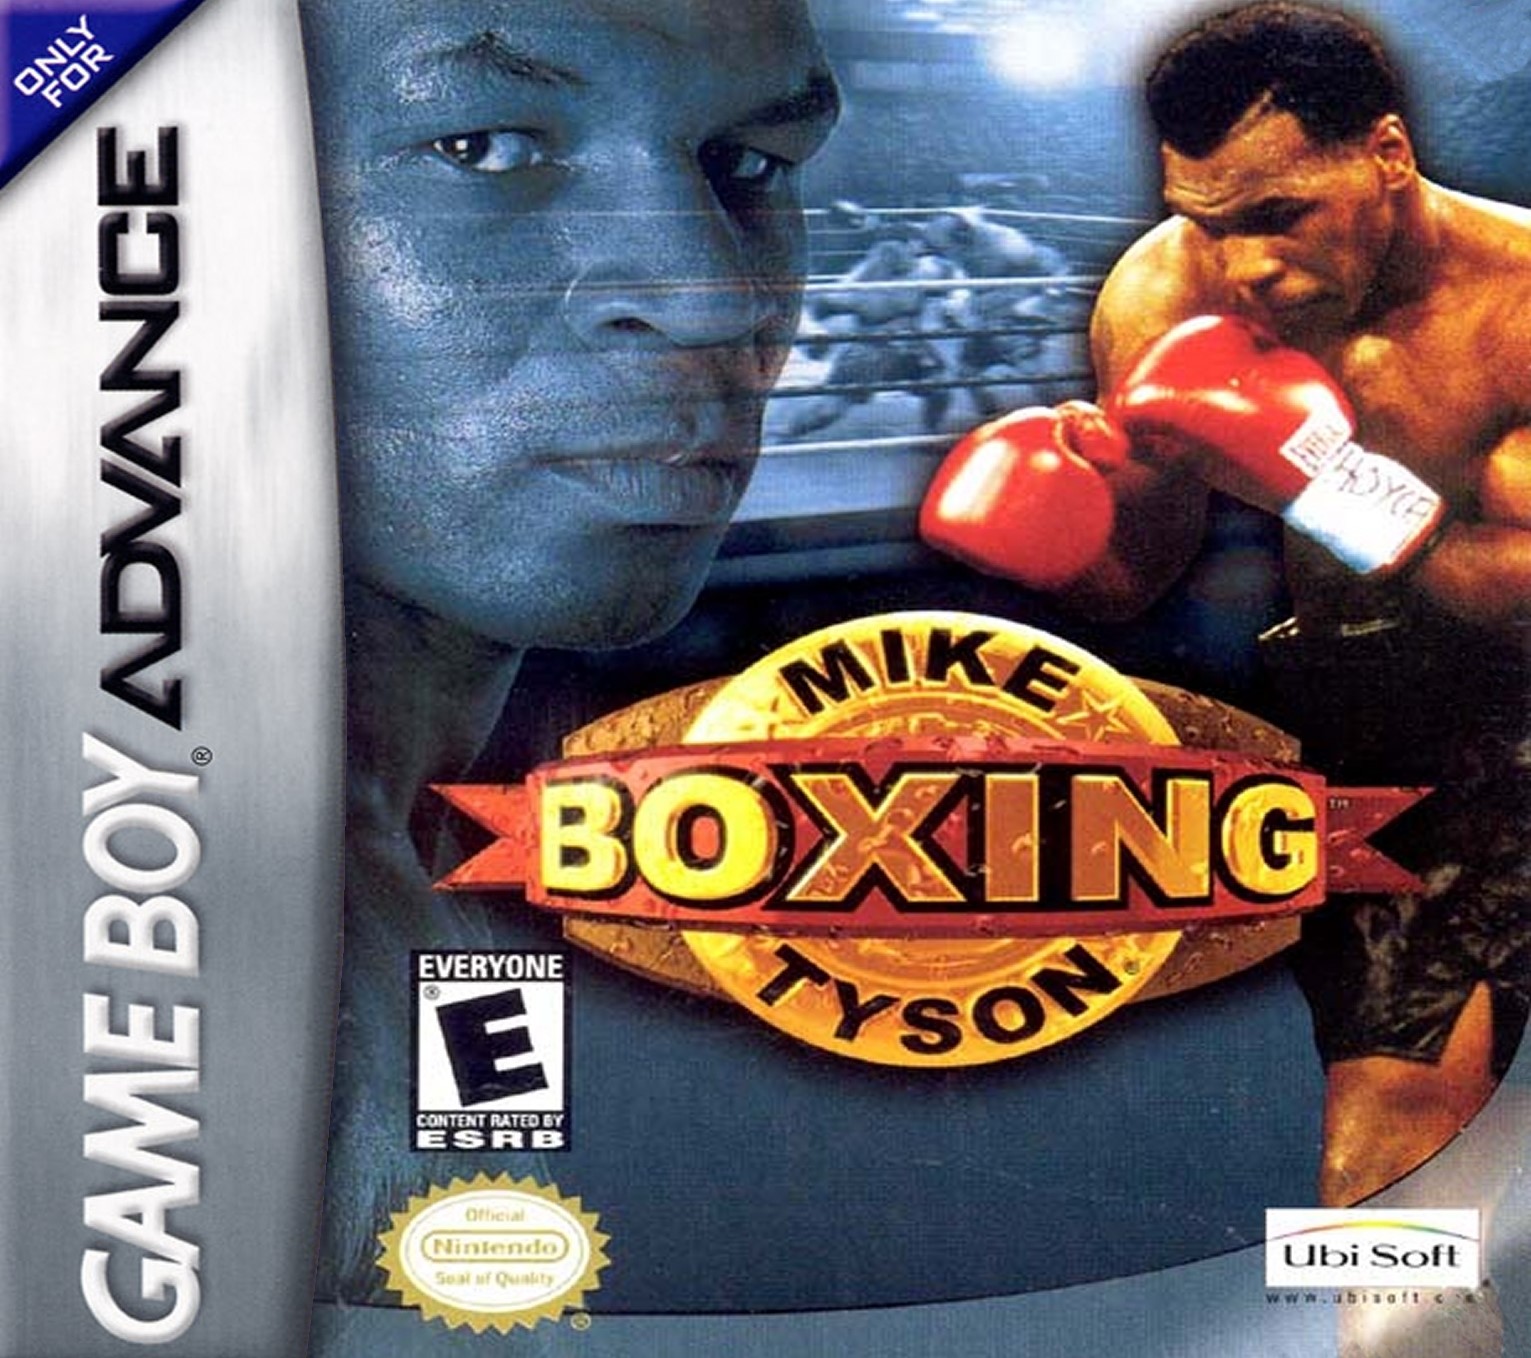 Nintendo boxing. Mike Tyson Boxing. Нинтендо бокс игра. Диск с игрой бокс. Nintendo игра про бокс.